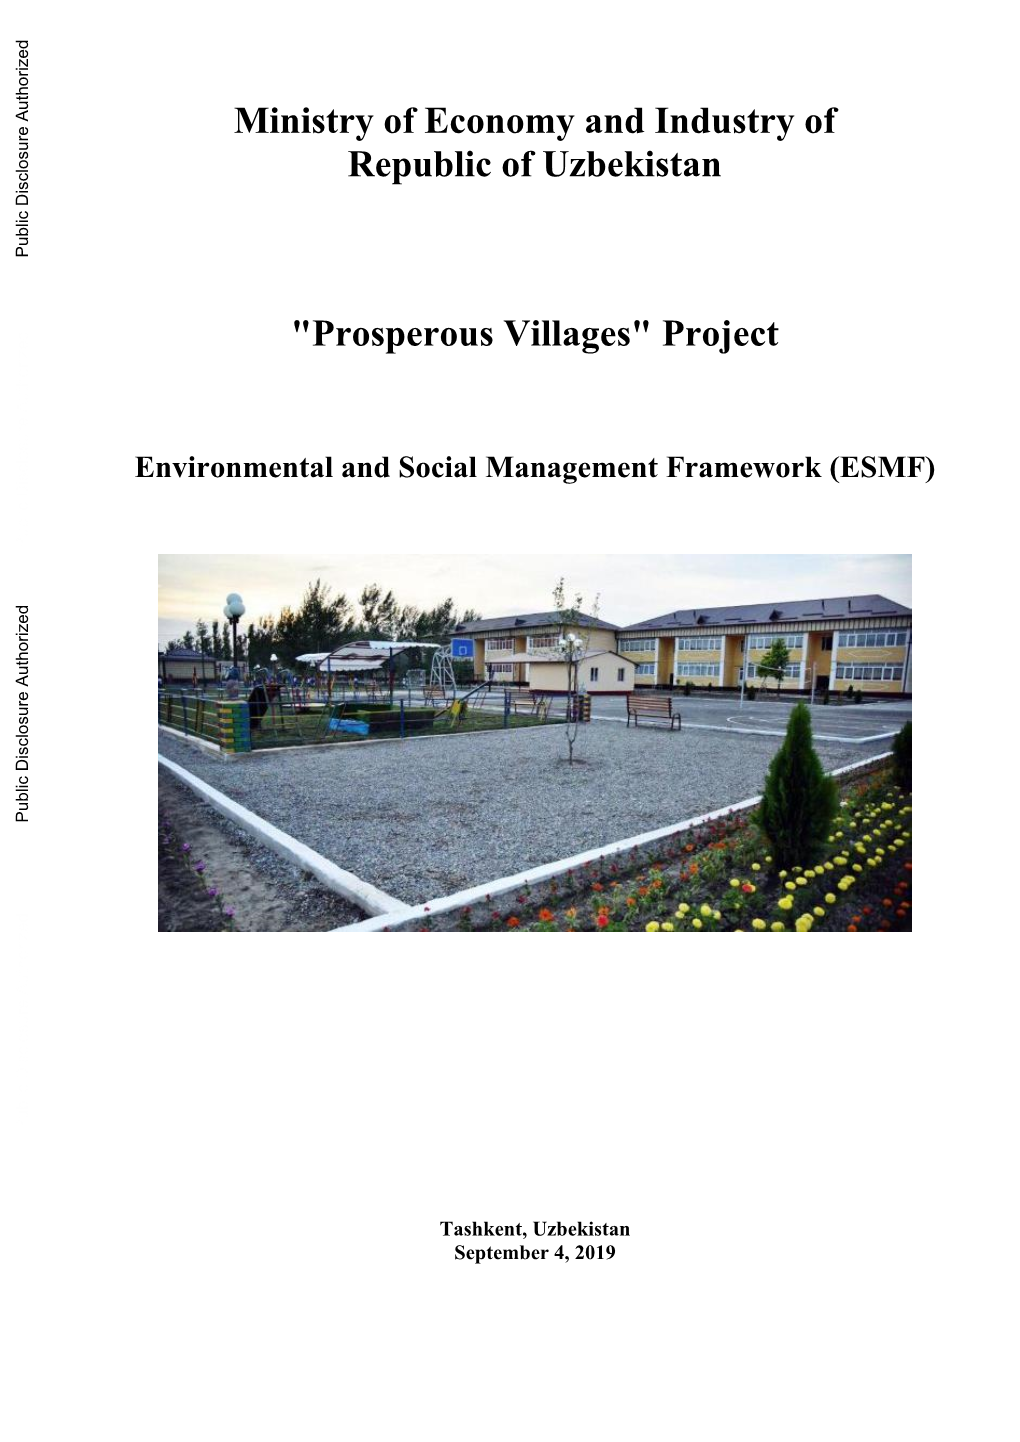 Environmental and Social Management Framework (ESMF)